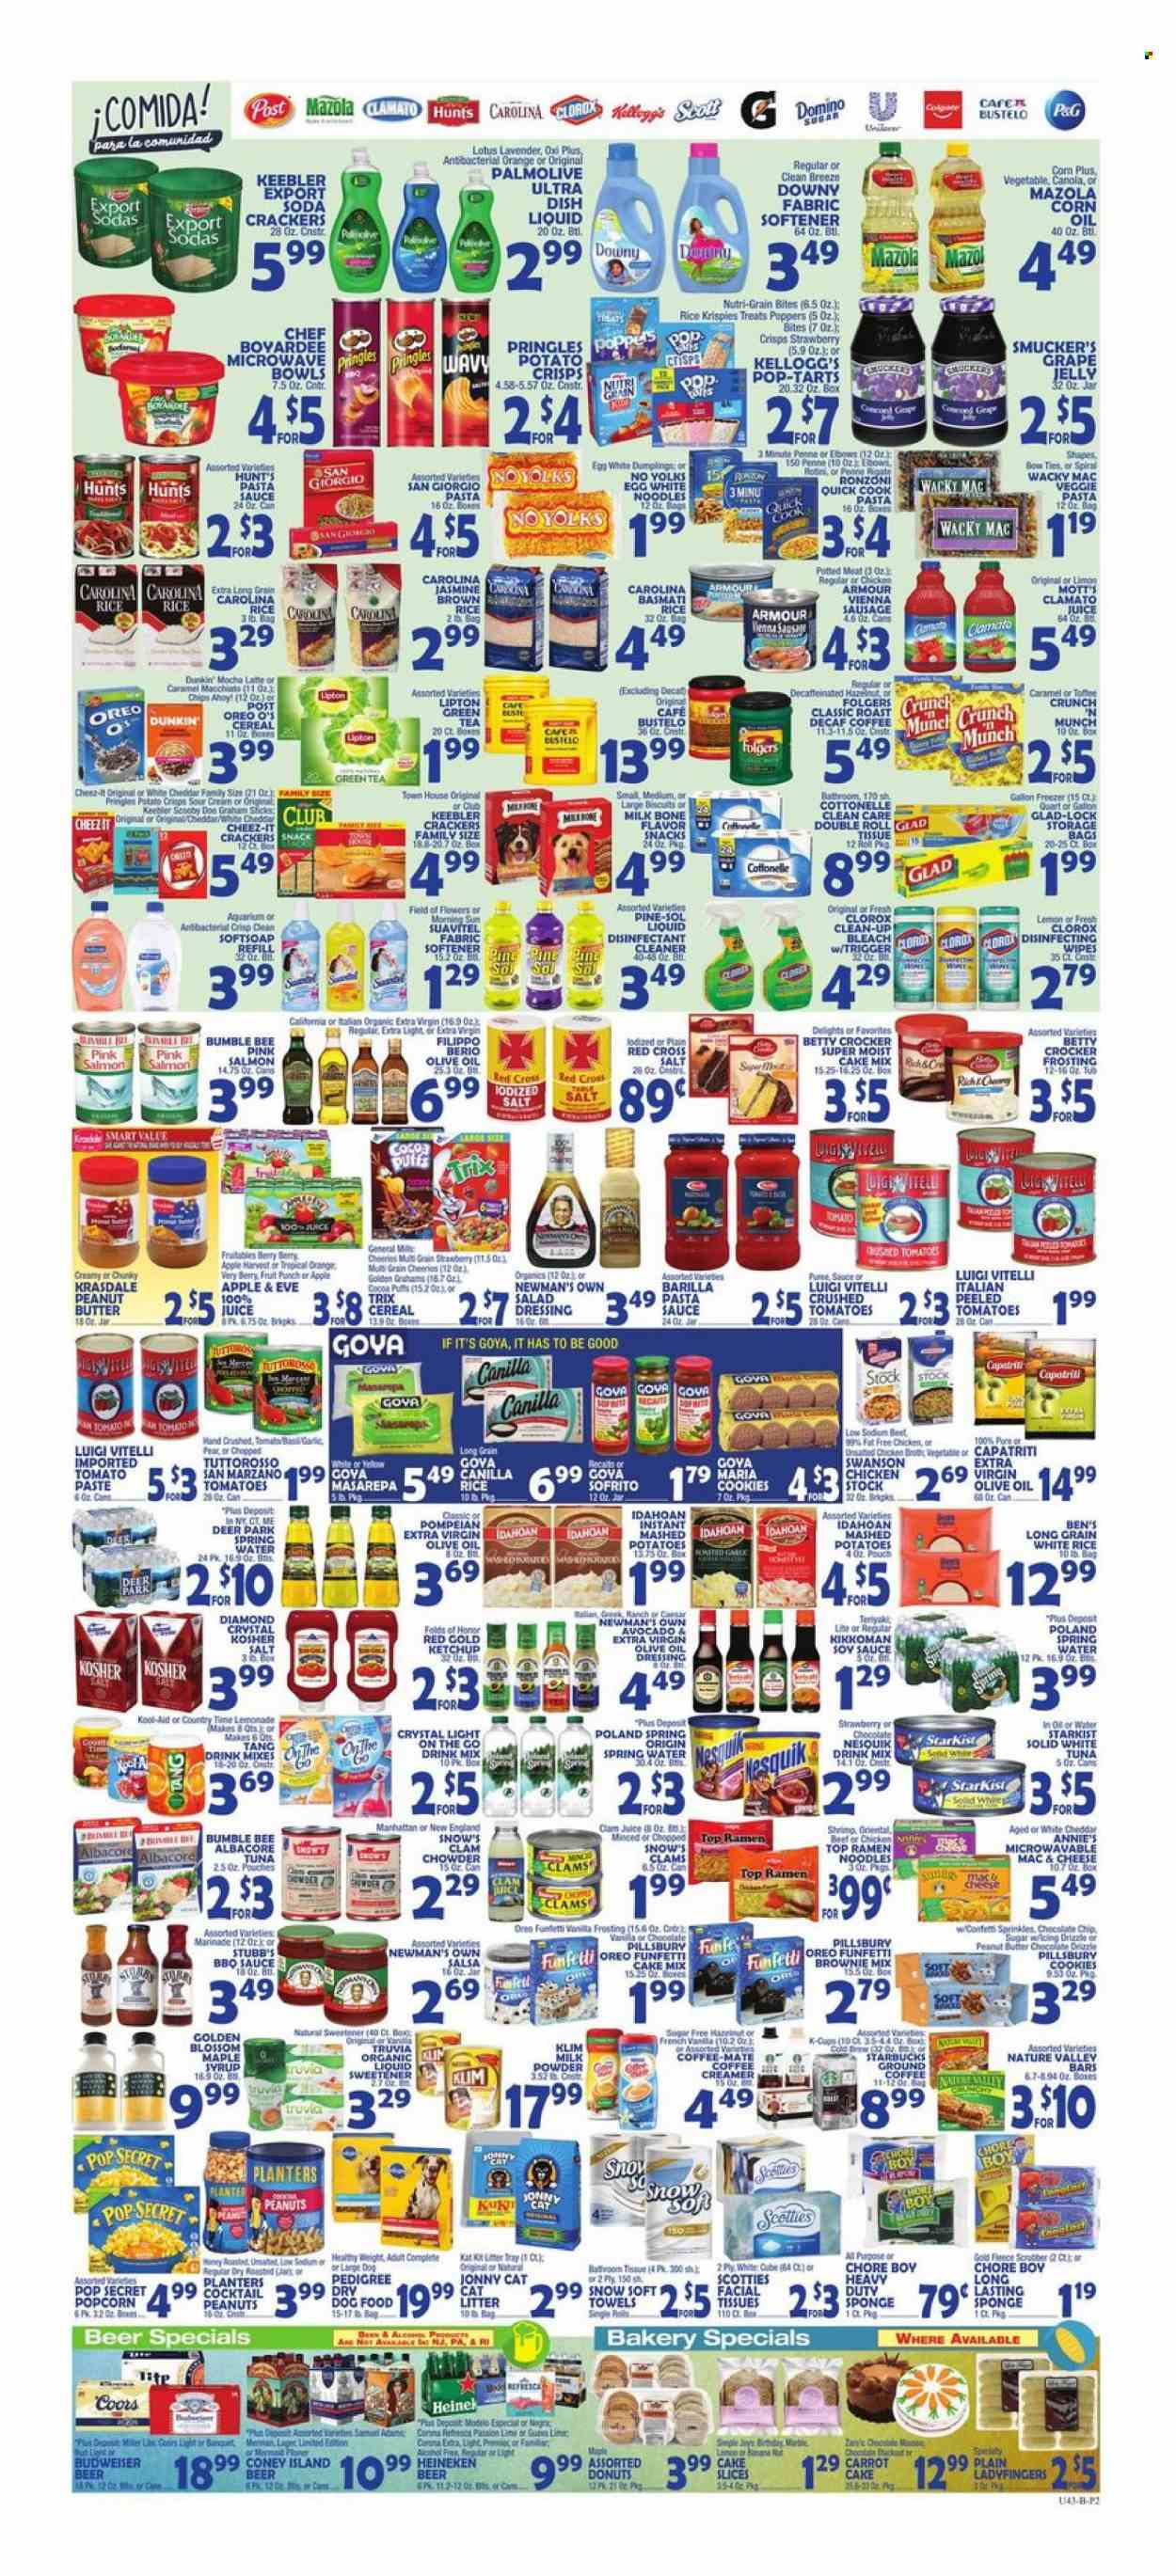 Bravo Supermarkets ad  - 09.24.2021 - 09.30.2021.